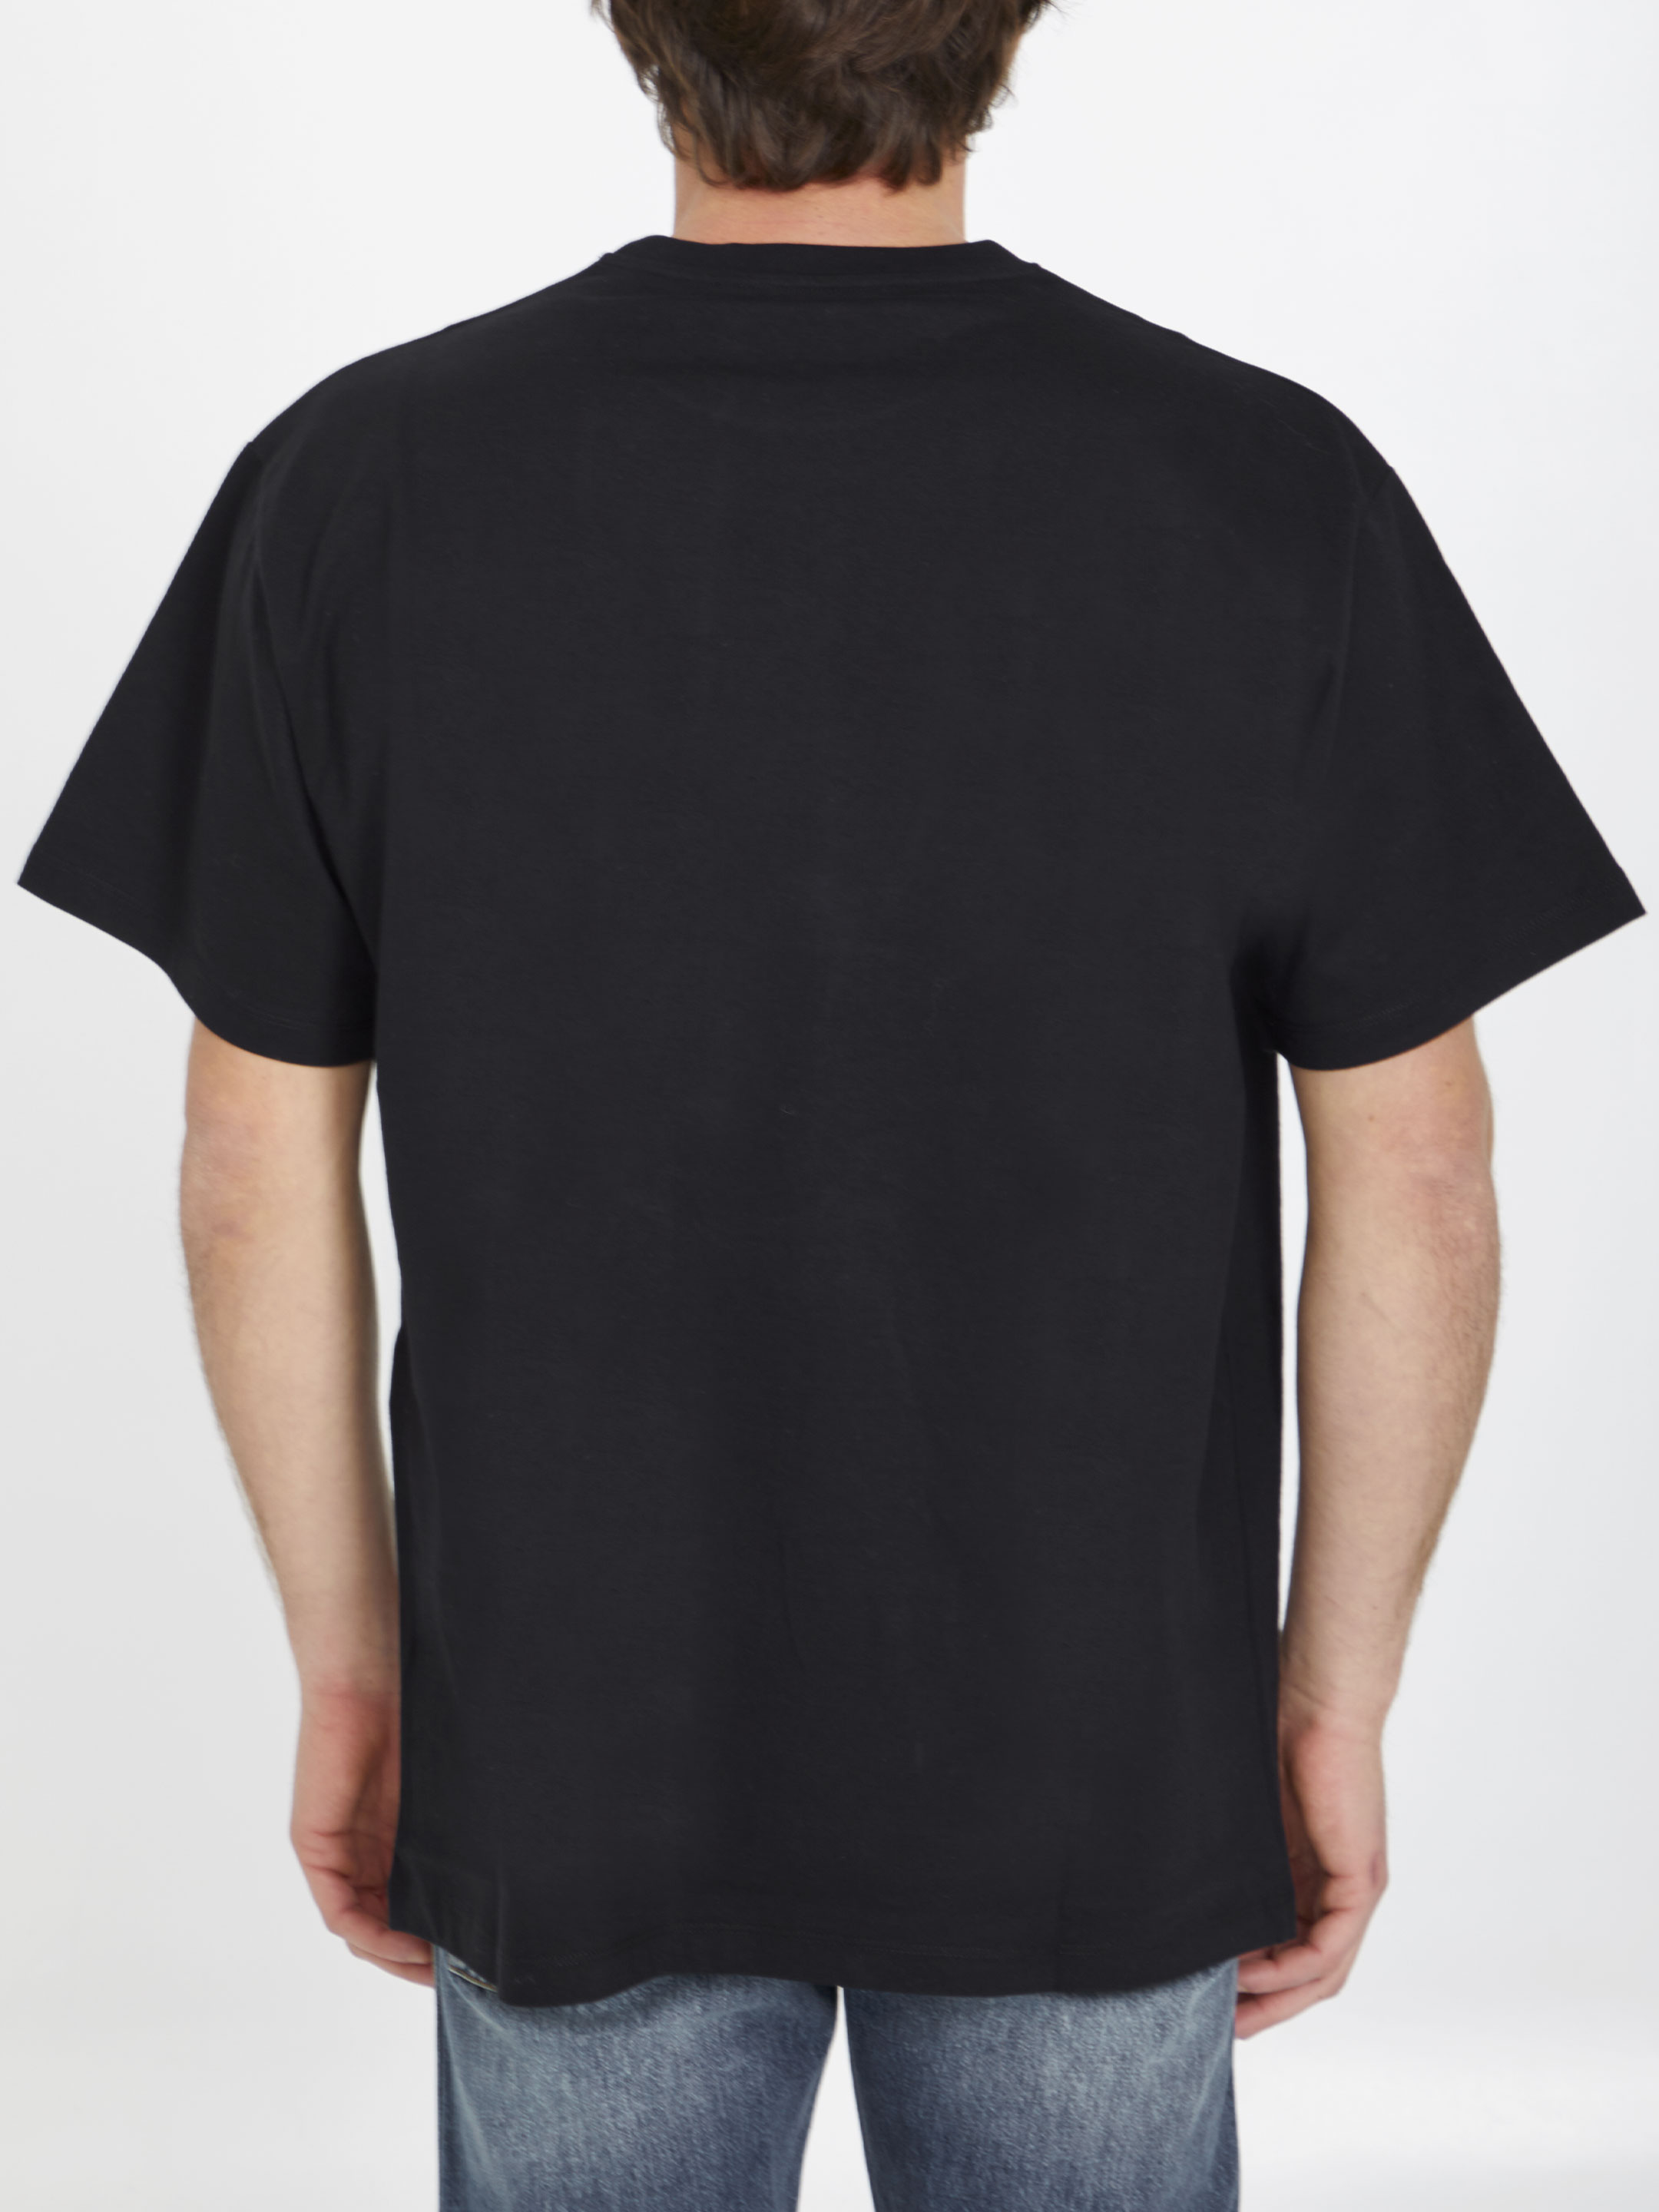 Toile Iconographe cotton jersey T-shirt